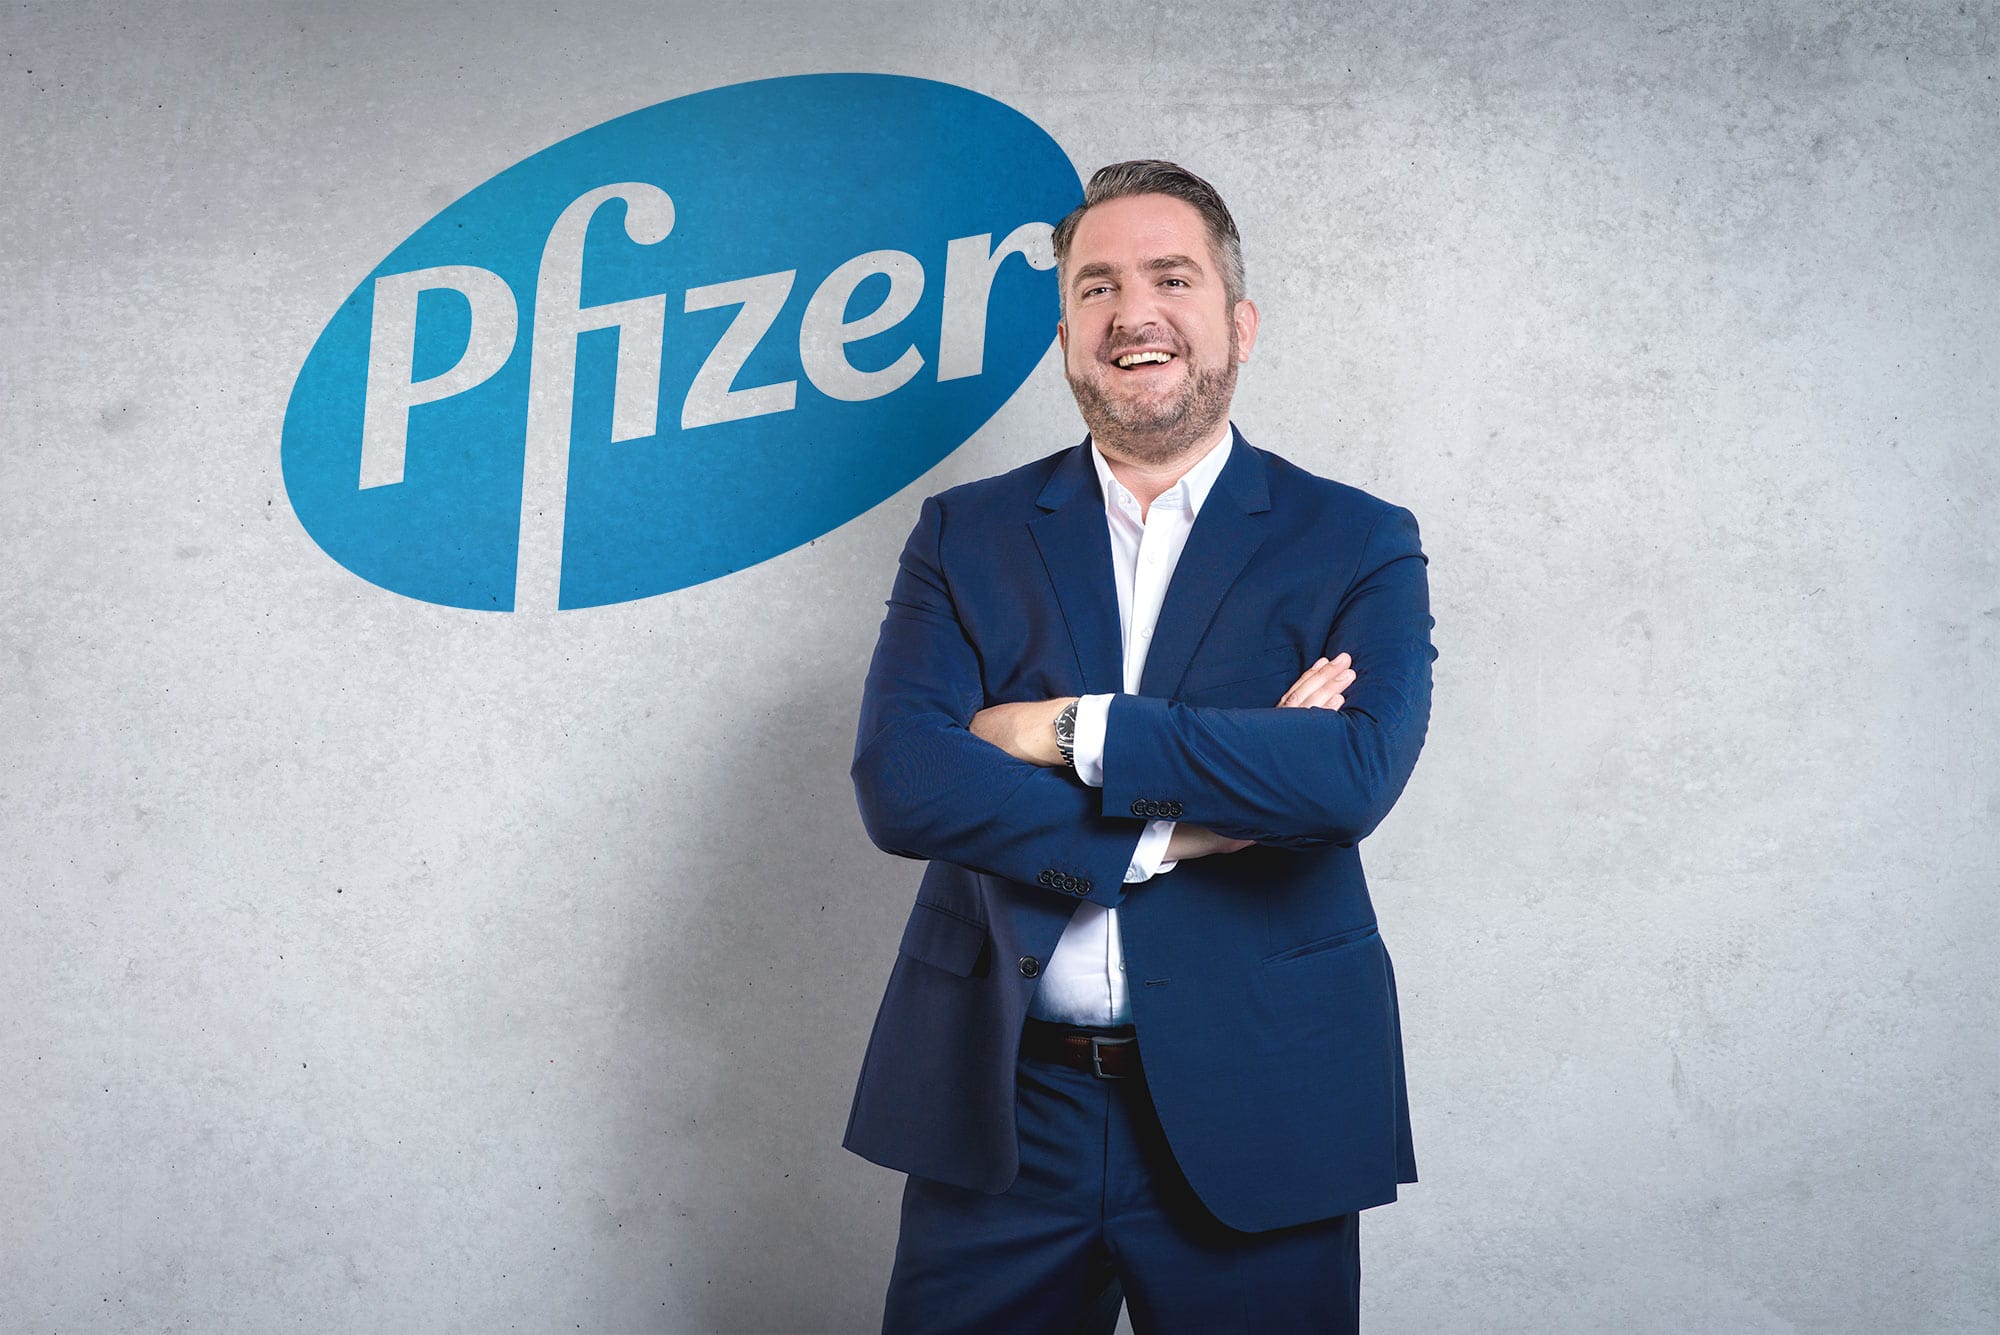 Pfizer-Germany-Employer-Branding-Human-Resources-Campaign-Portraits-01.jpg